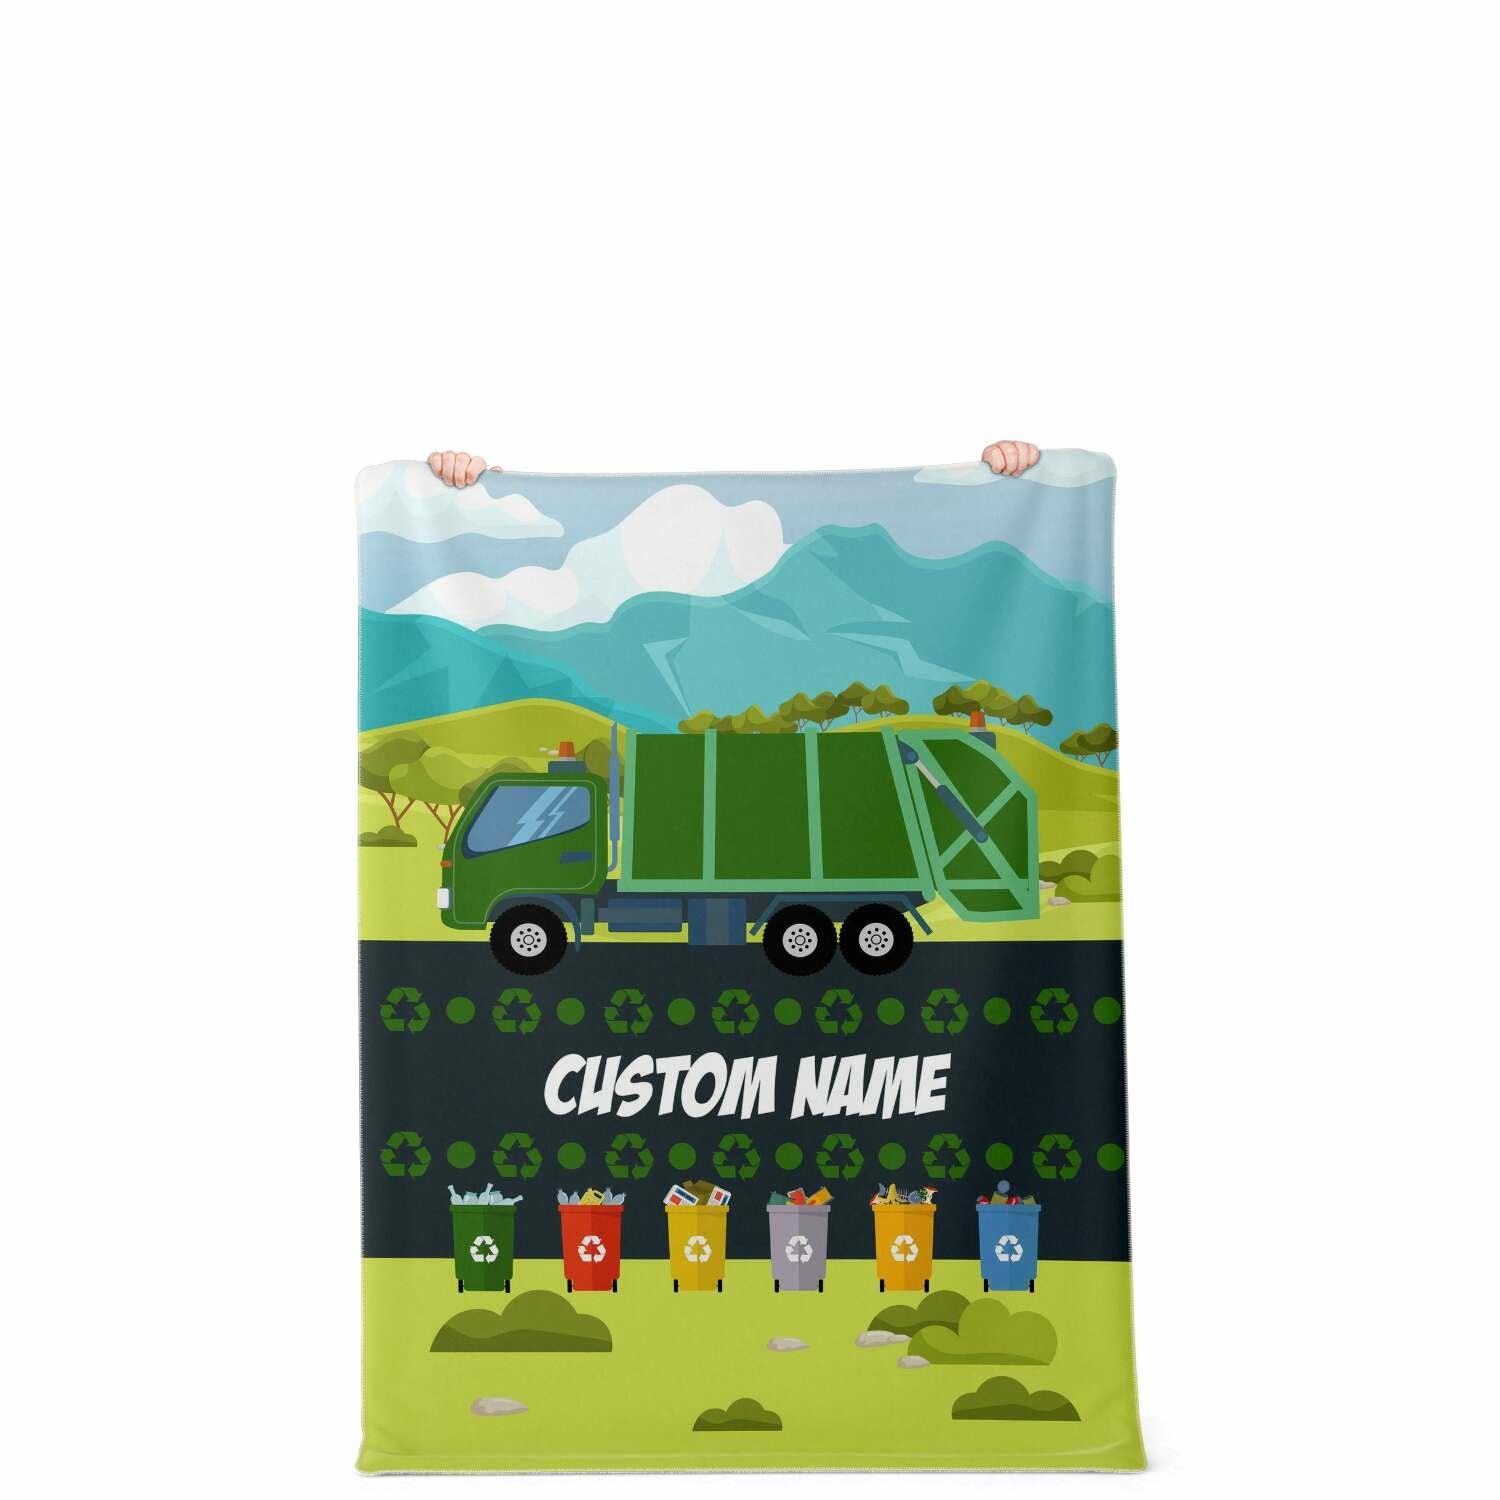 Personalized Name Garbage Truck Blanket for Kids, Custom Name Blanket for Boys & Girls